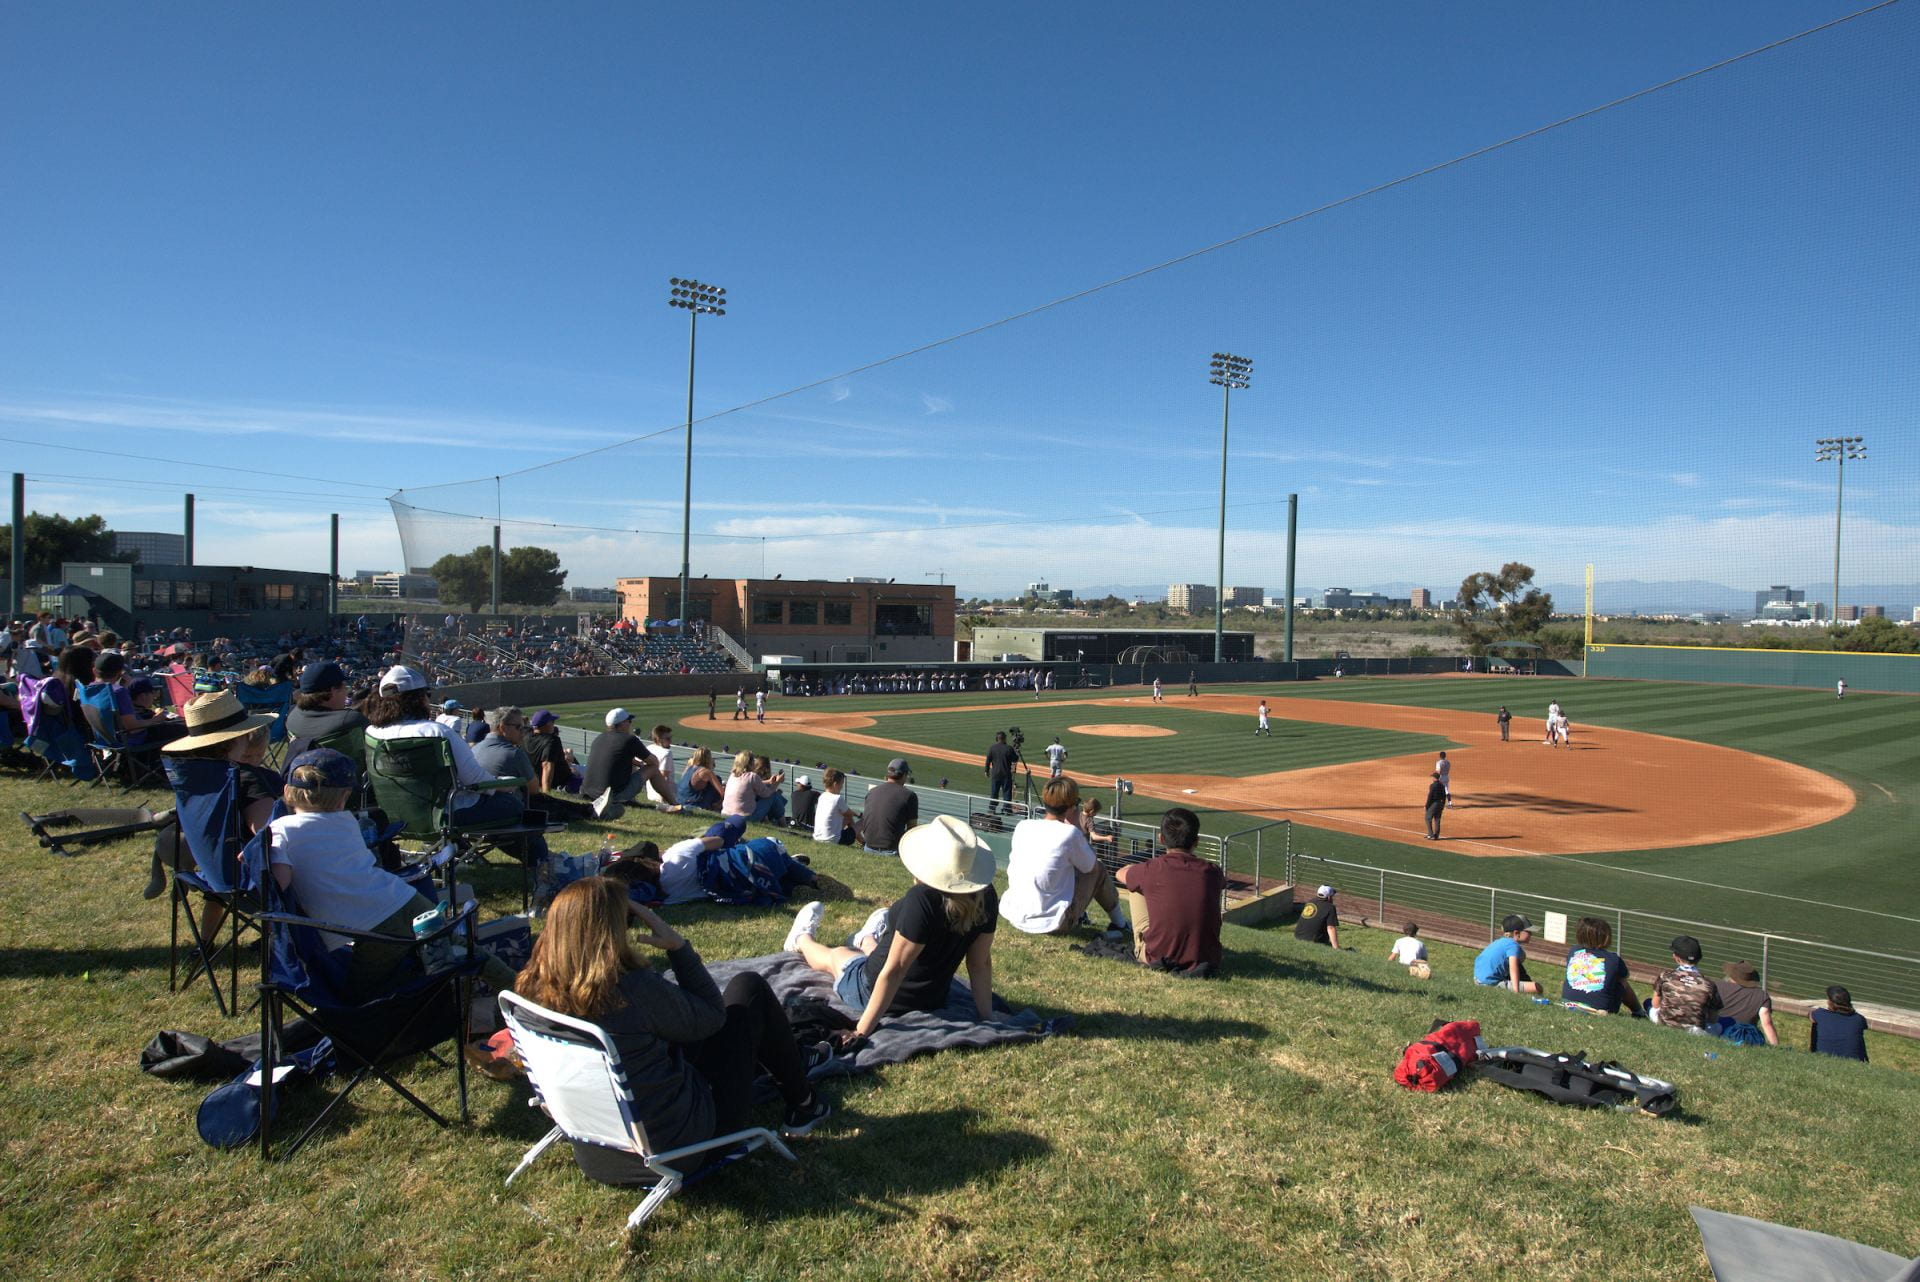 Spectators watching a baseball game at Anteater Ballpark